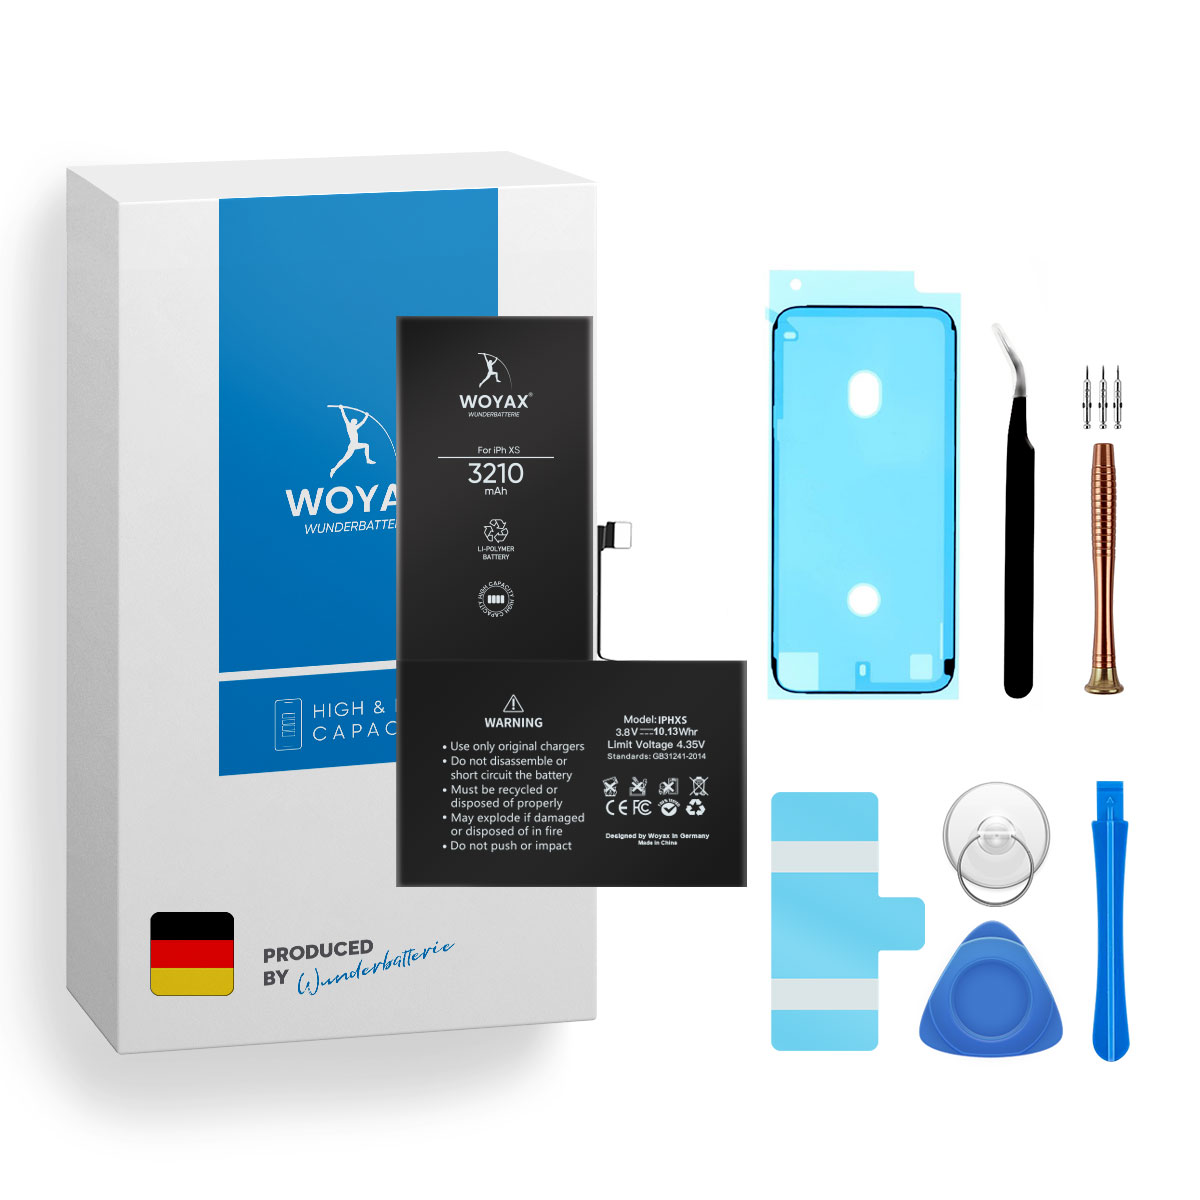 WOYAX Wunderbatterie für iPhone Akku 3.81 Ersatzakku Li-Ionen Handy-Akku, 3210mAh XS Kapazität Hohe Volt